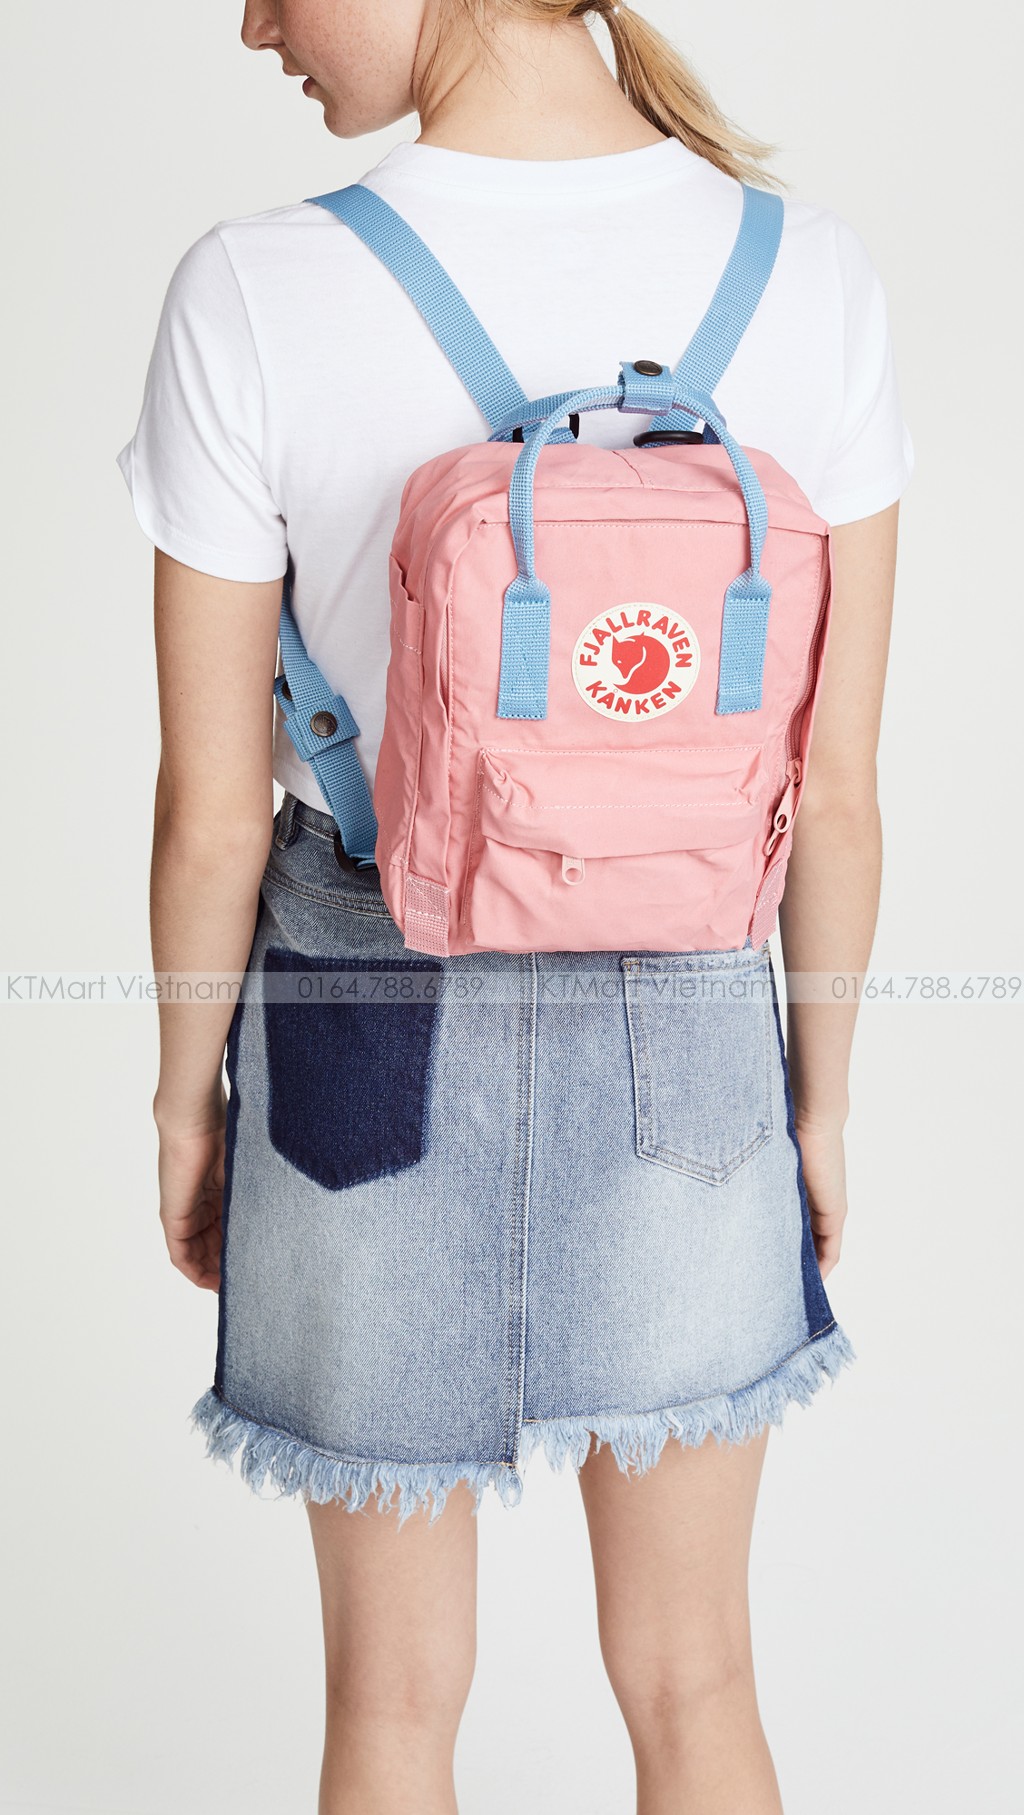 FjallRaven Kanken Mini Kids Backpack Pink Royal-Blue Fjallraven ktmart.vn 3